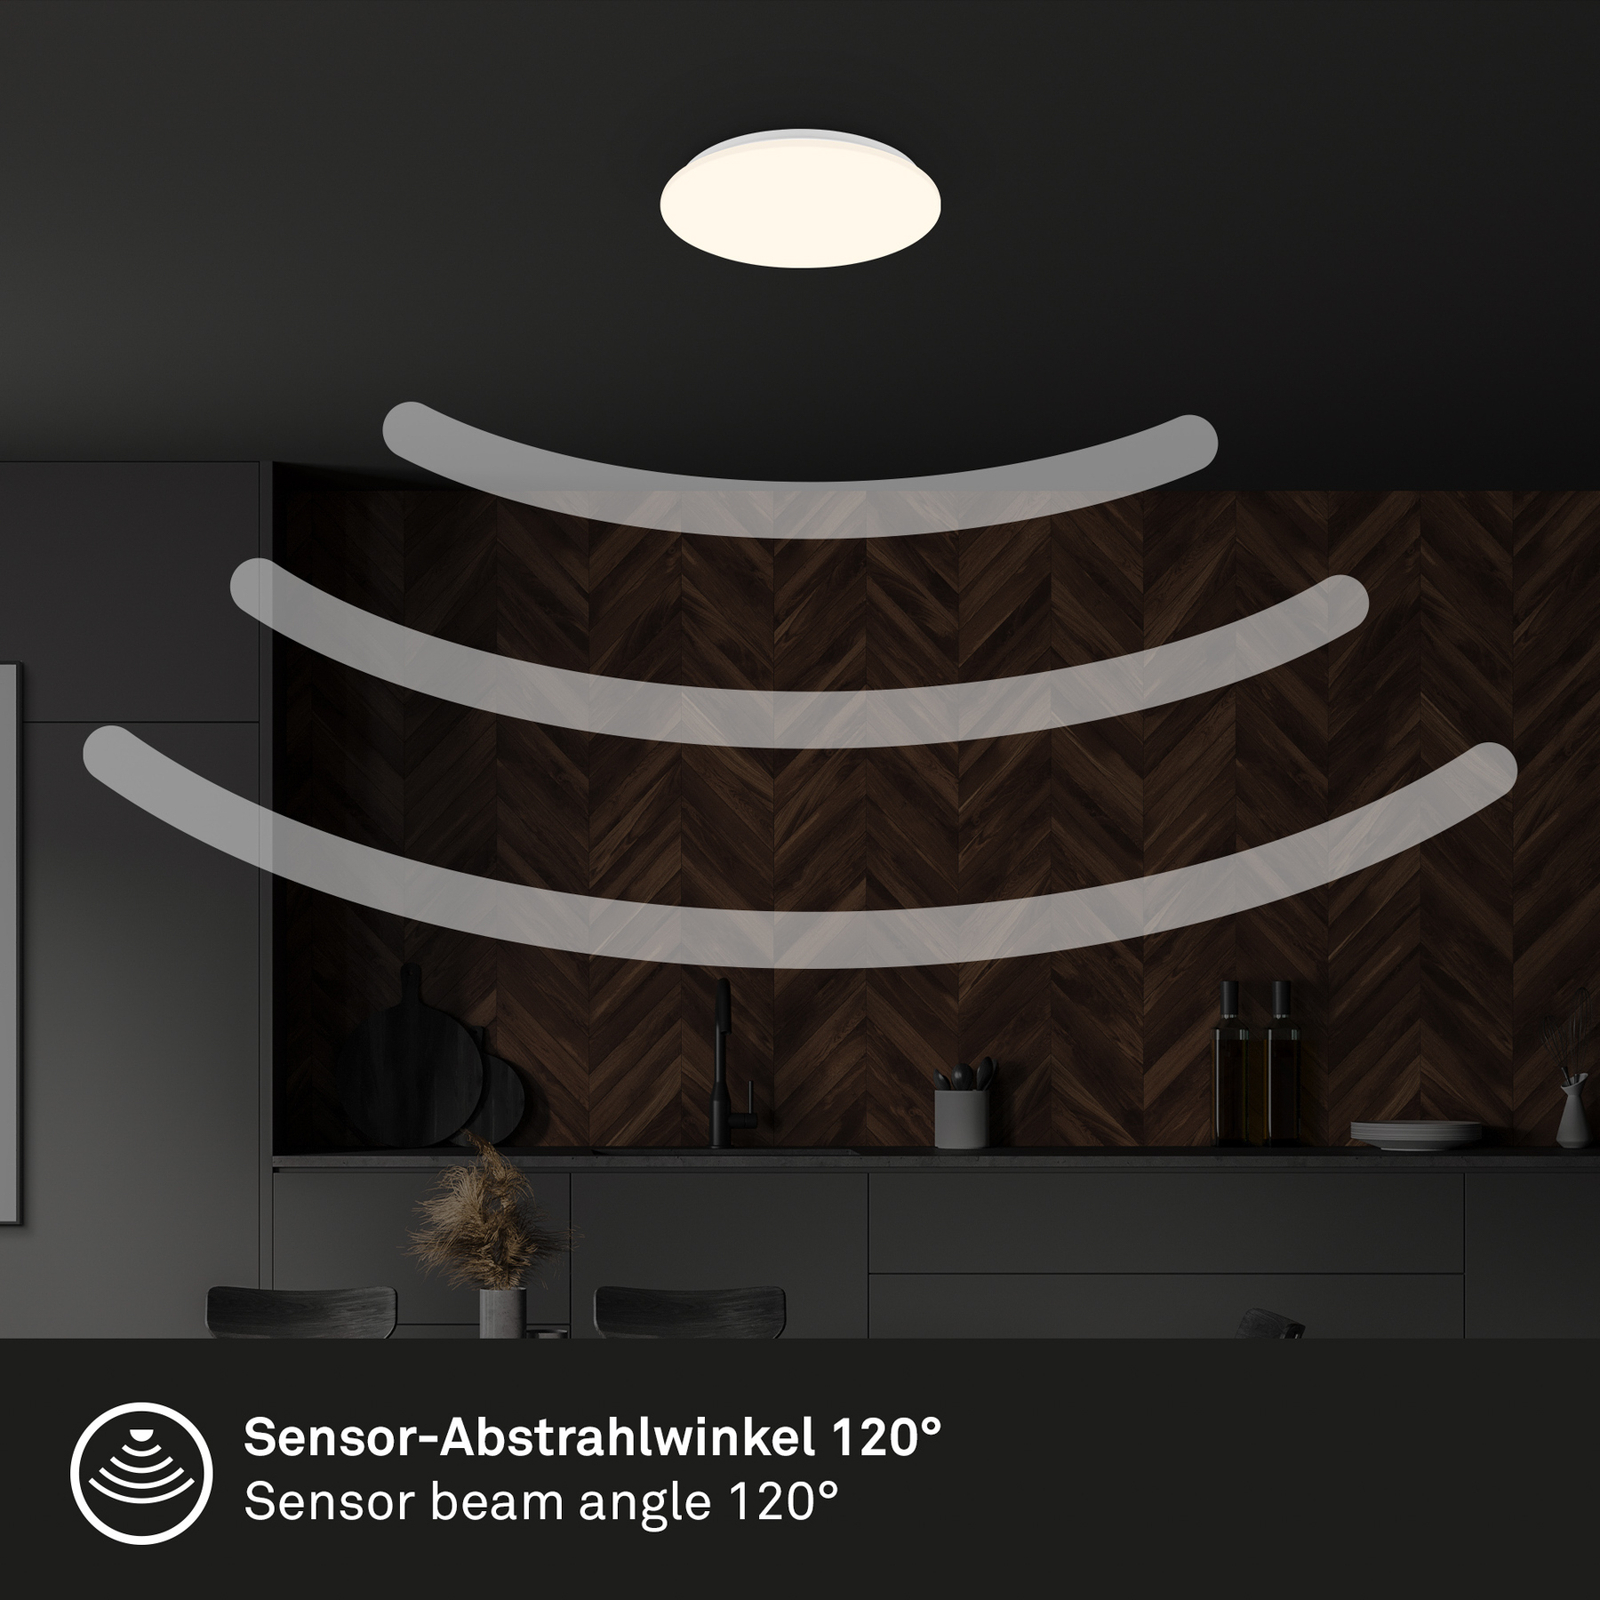 Ekos LED stropné svietidlo, senzor, Ø 26 cm